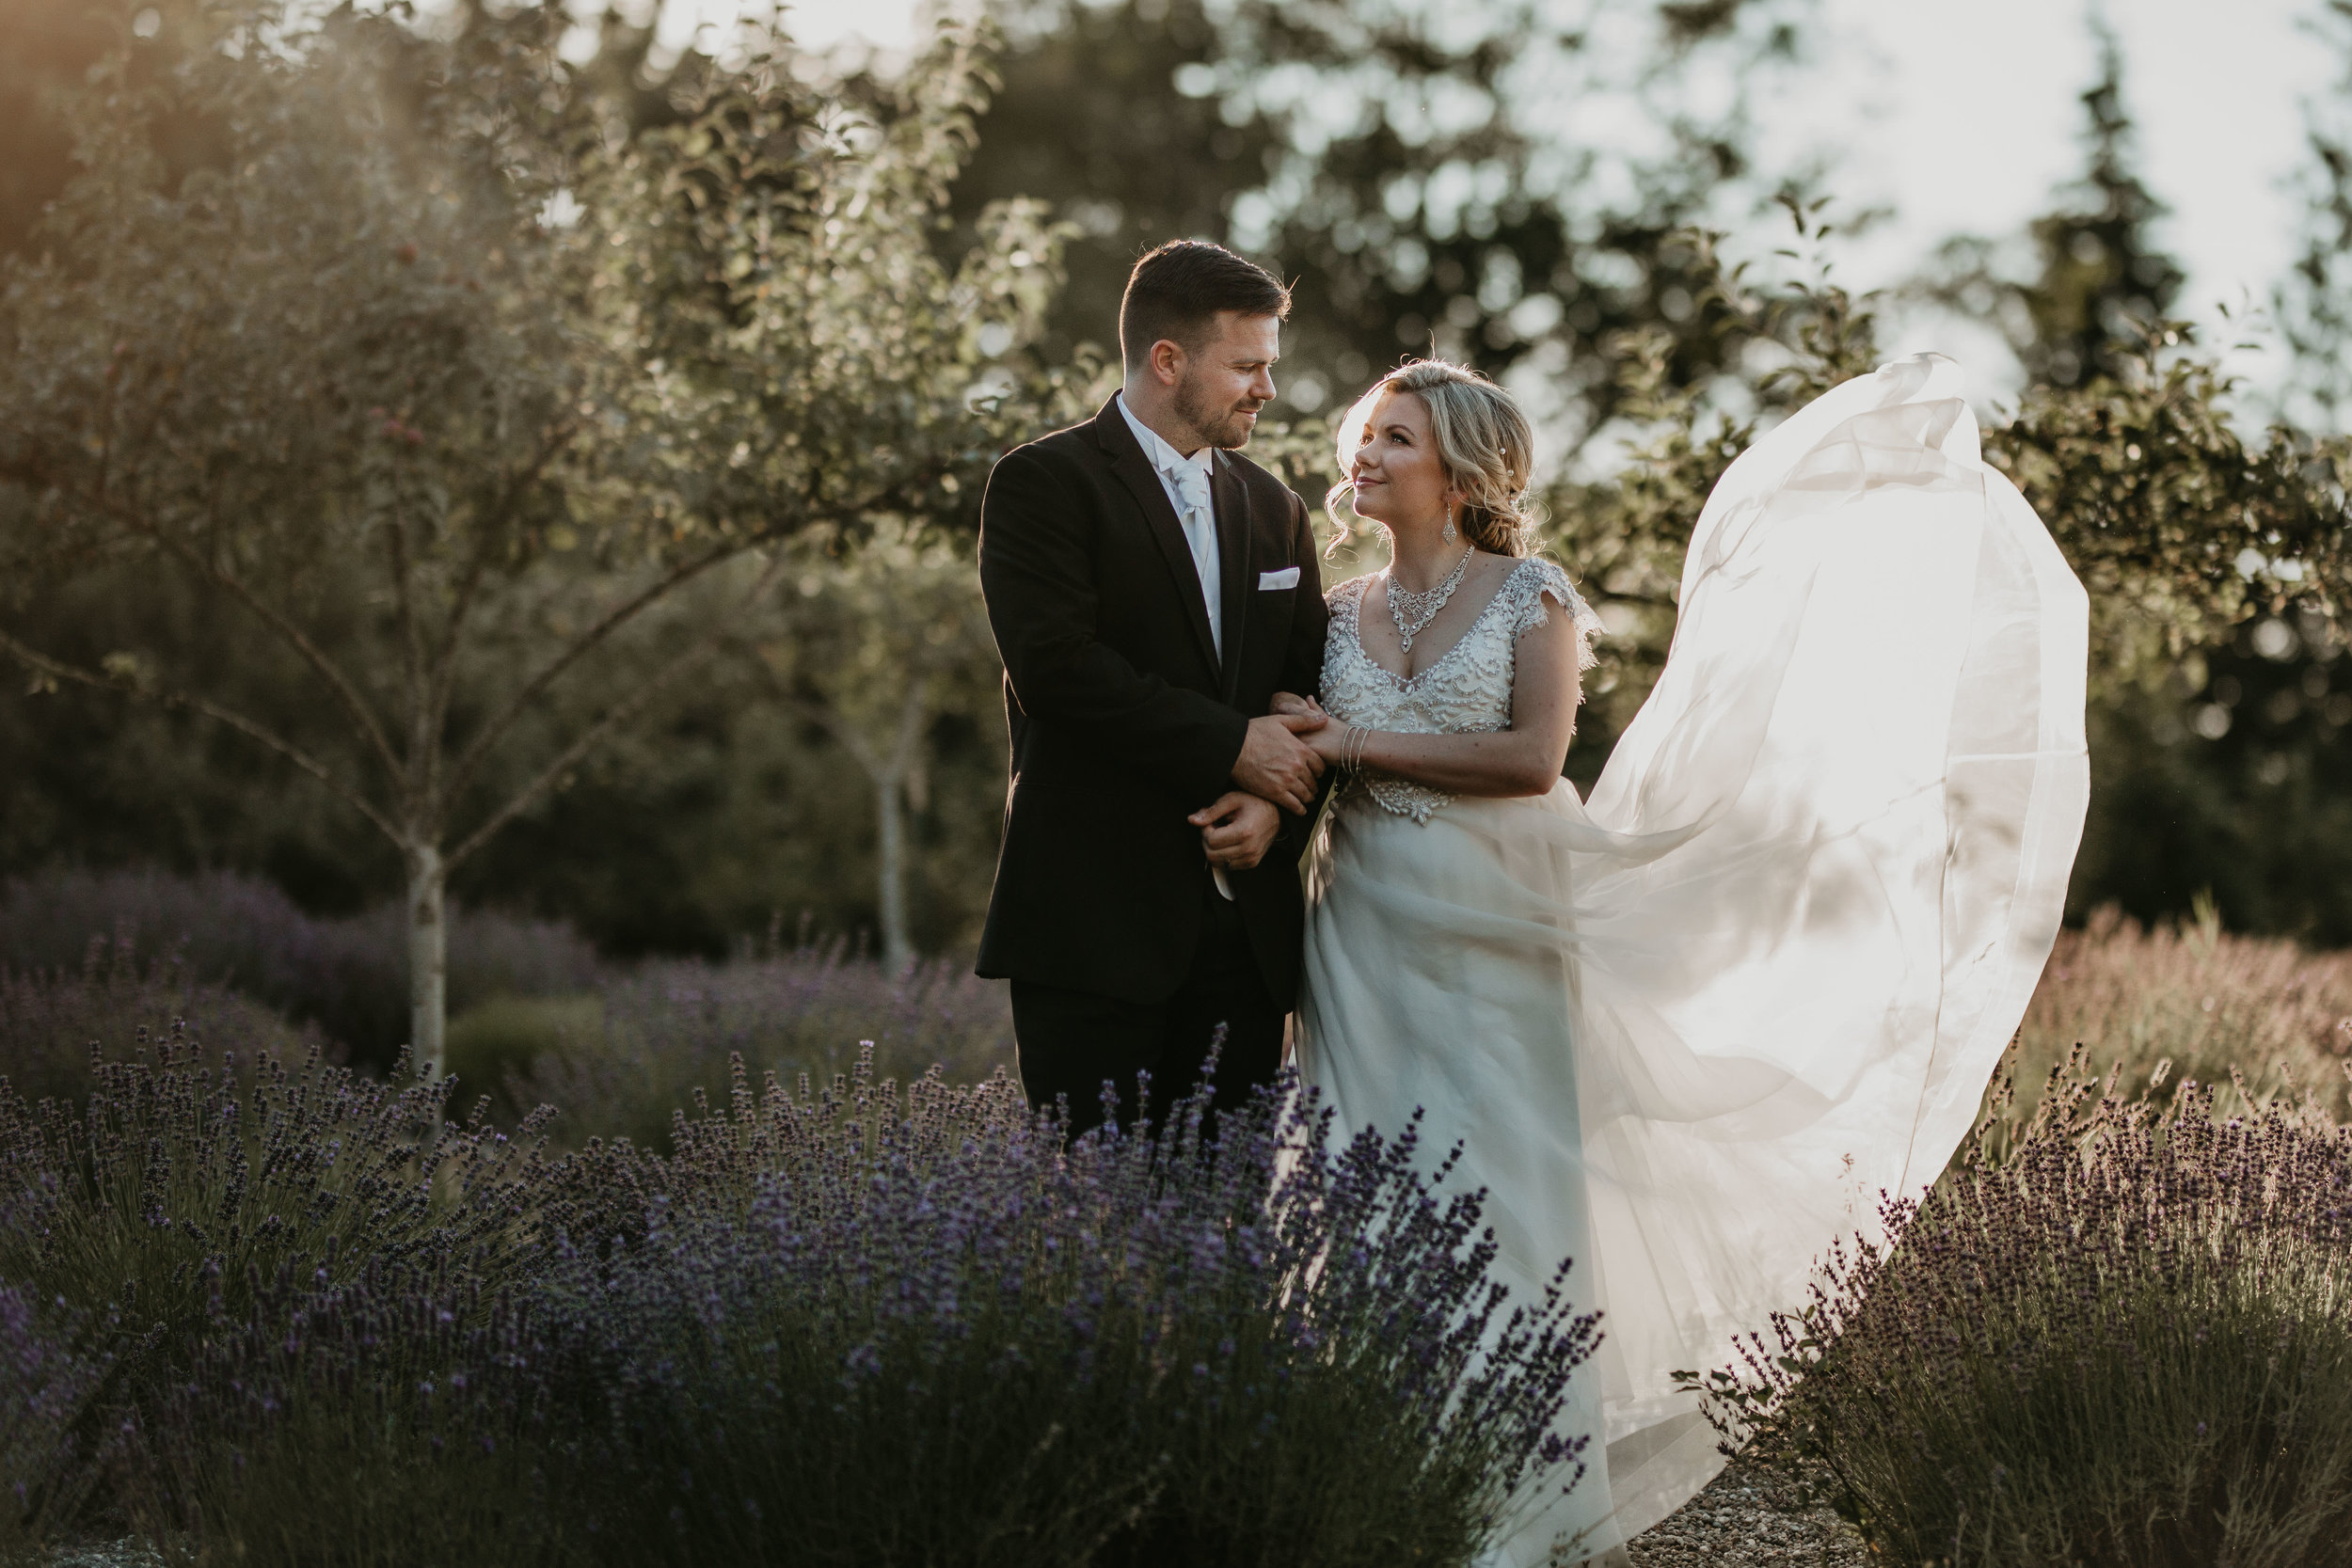 nicole-daacke-photography-kingston-house-bainbride-washington-wedding-photography-summer-wedding-lavendar-field-pacific-northwest-wedding-glam-forest-elopement-photographer-70.jpg